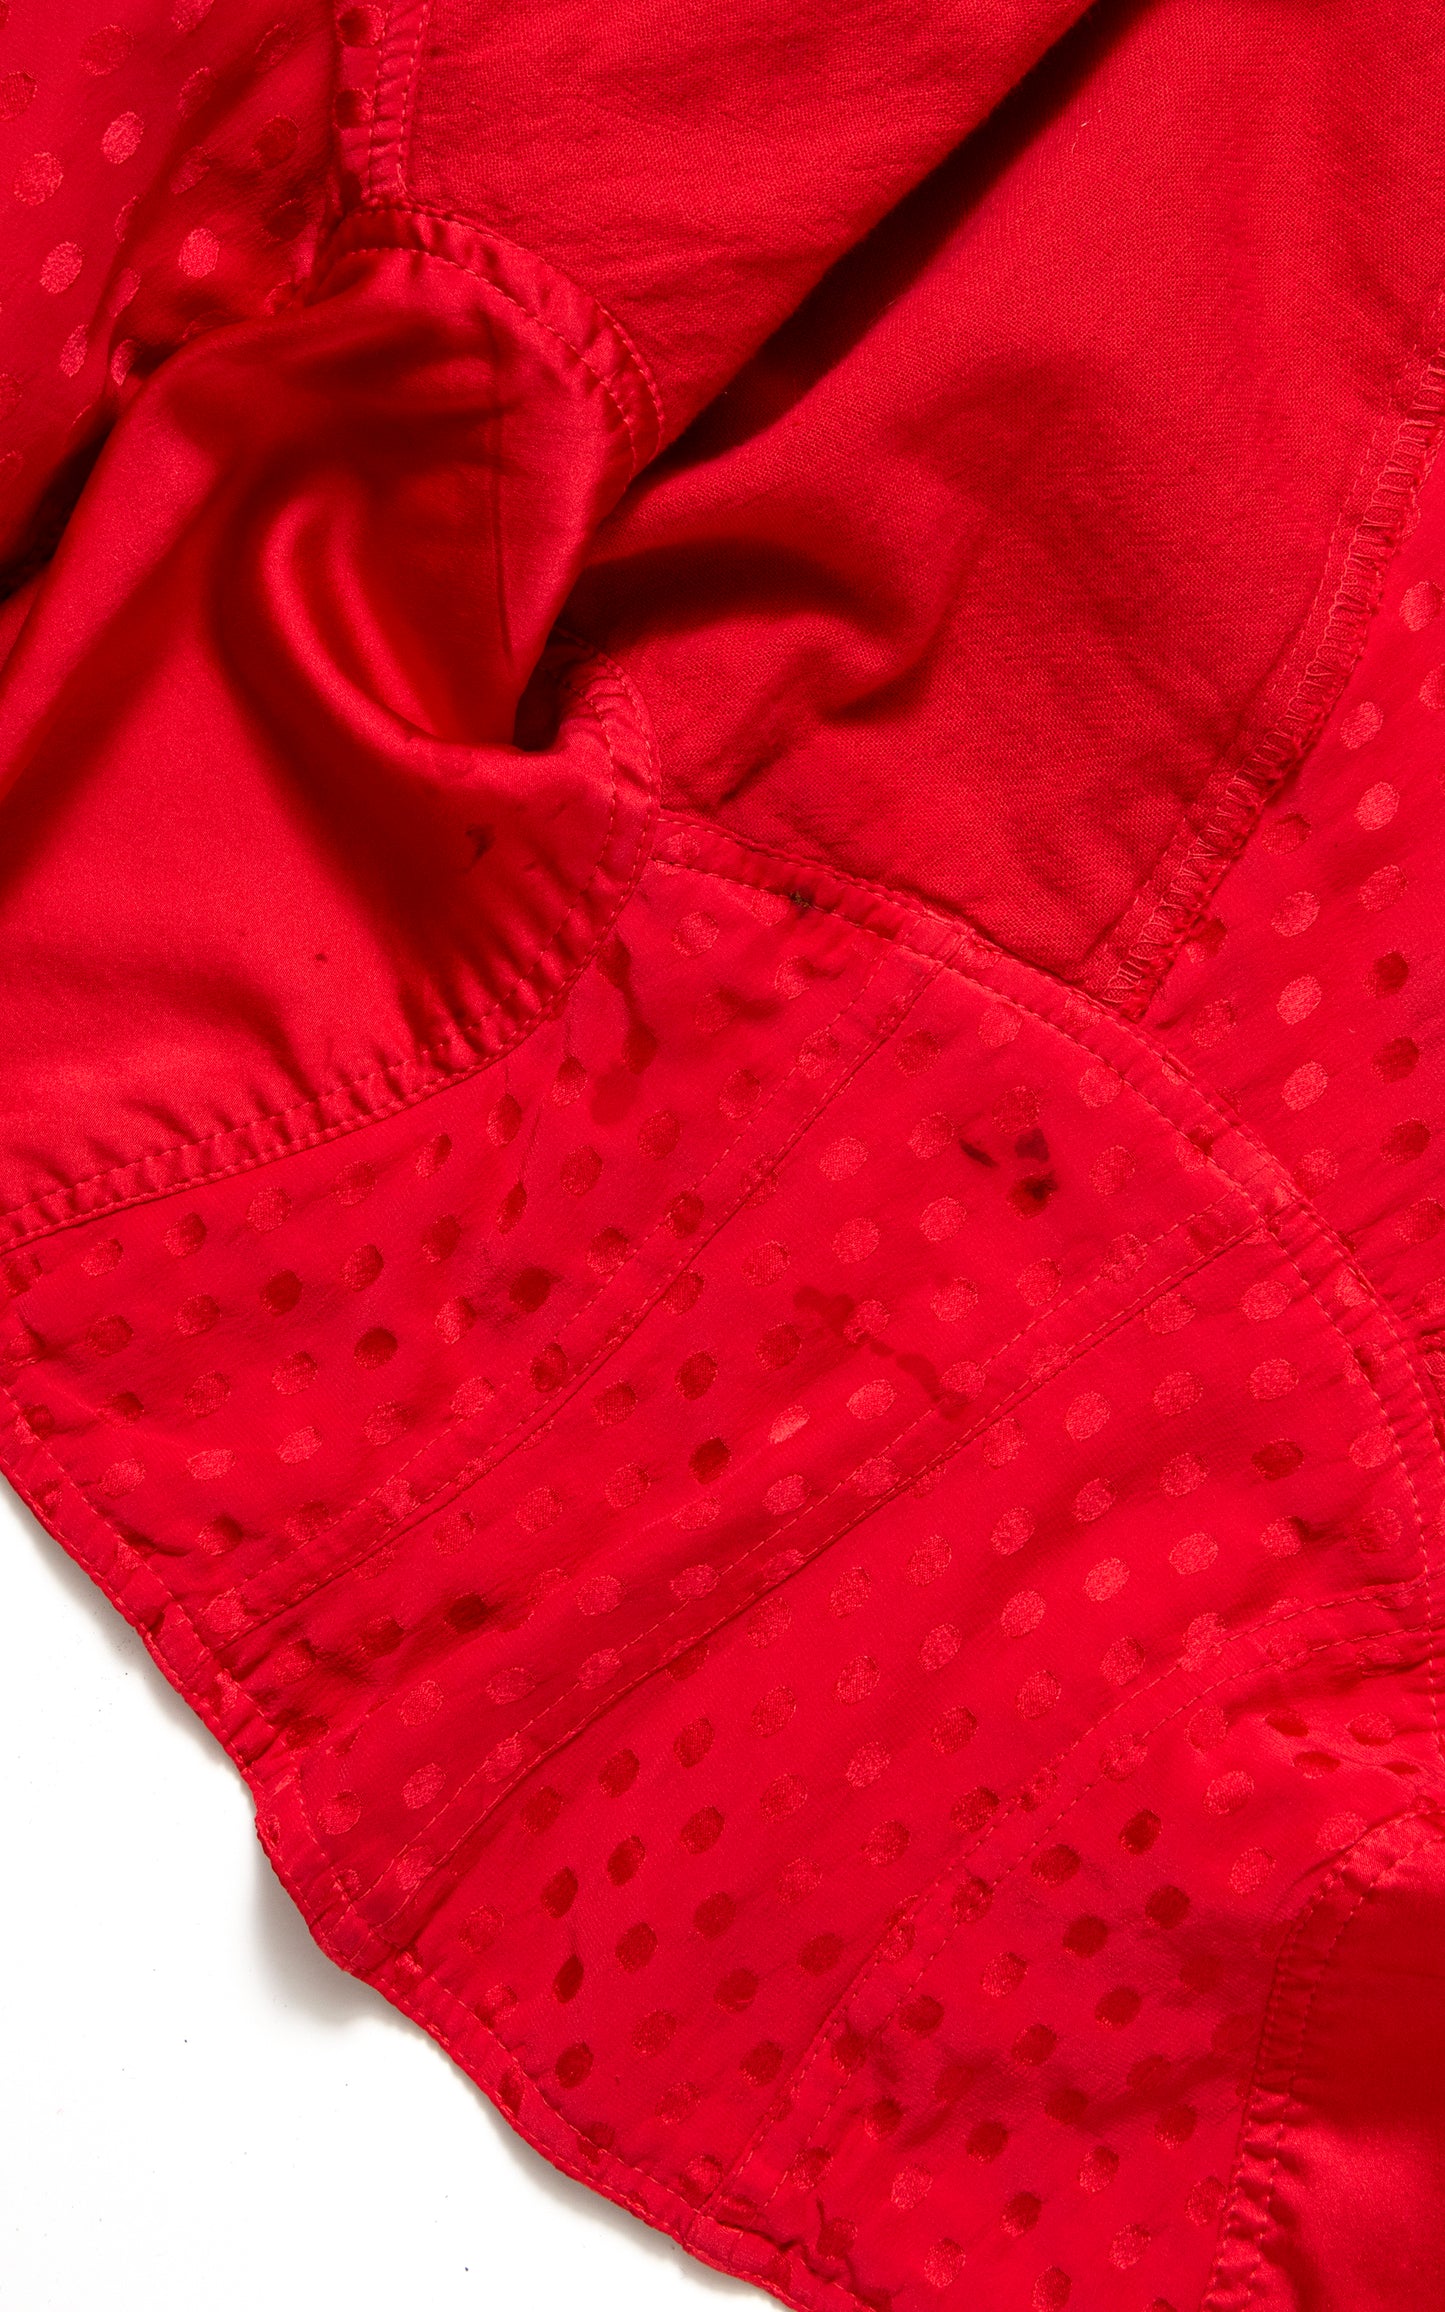 NEW ARRIVAL || 1980s French Designer Silk Tailored Jacket | medium